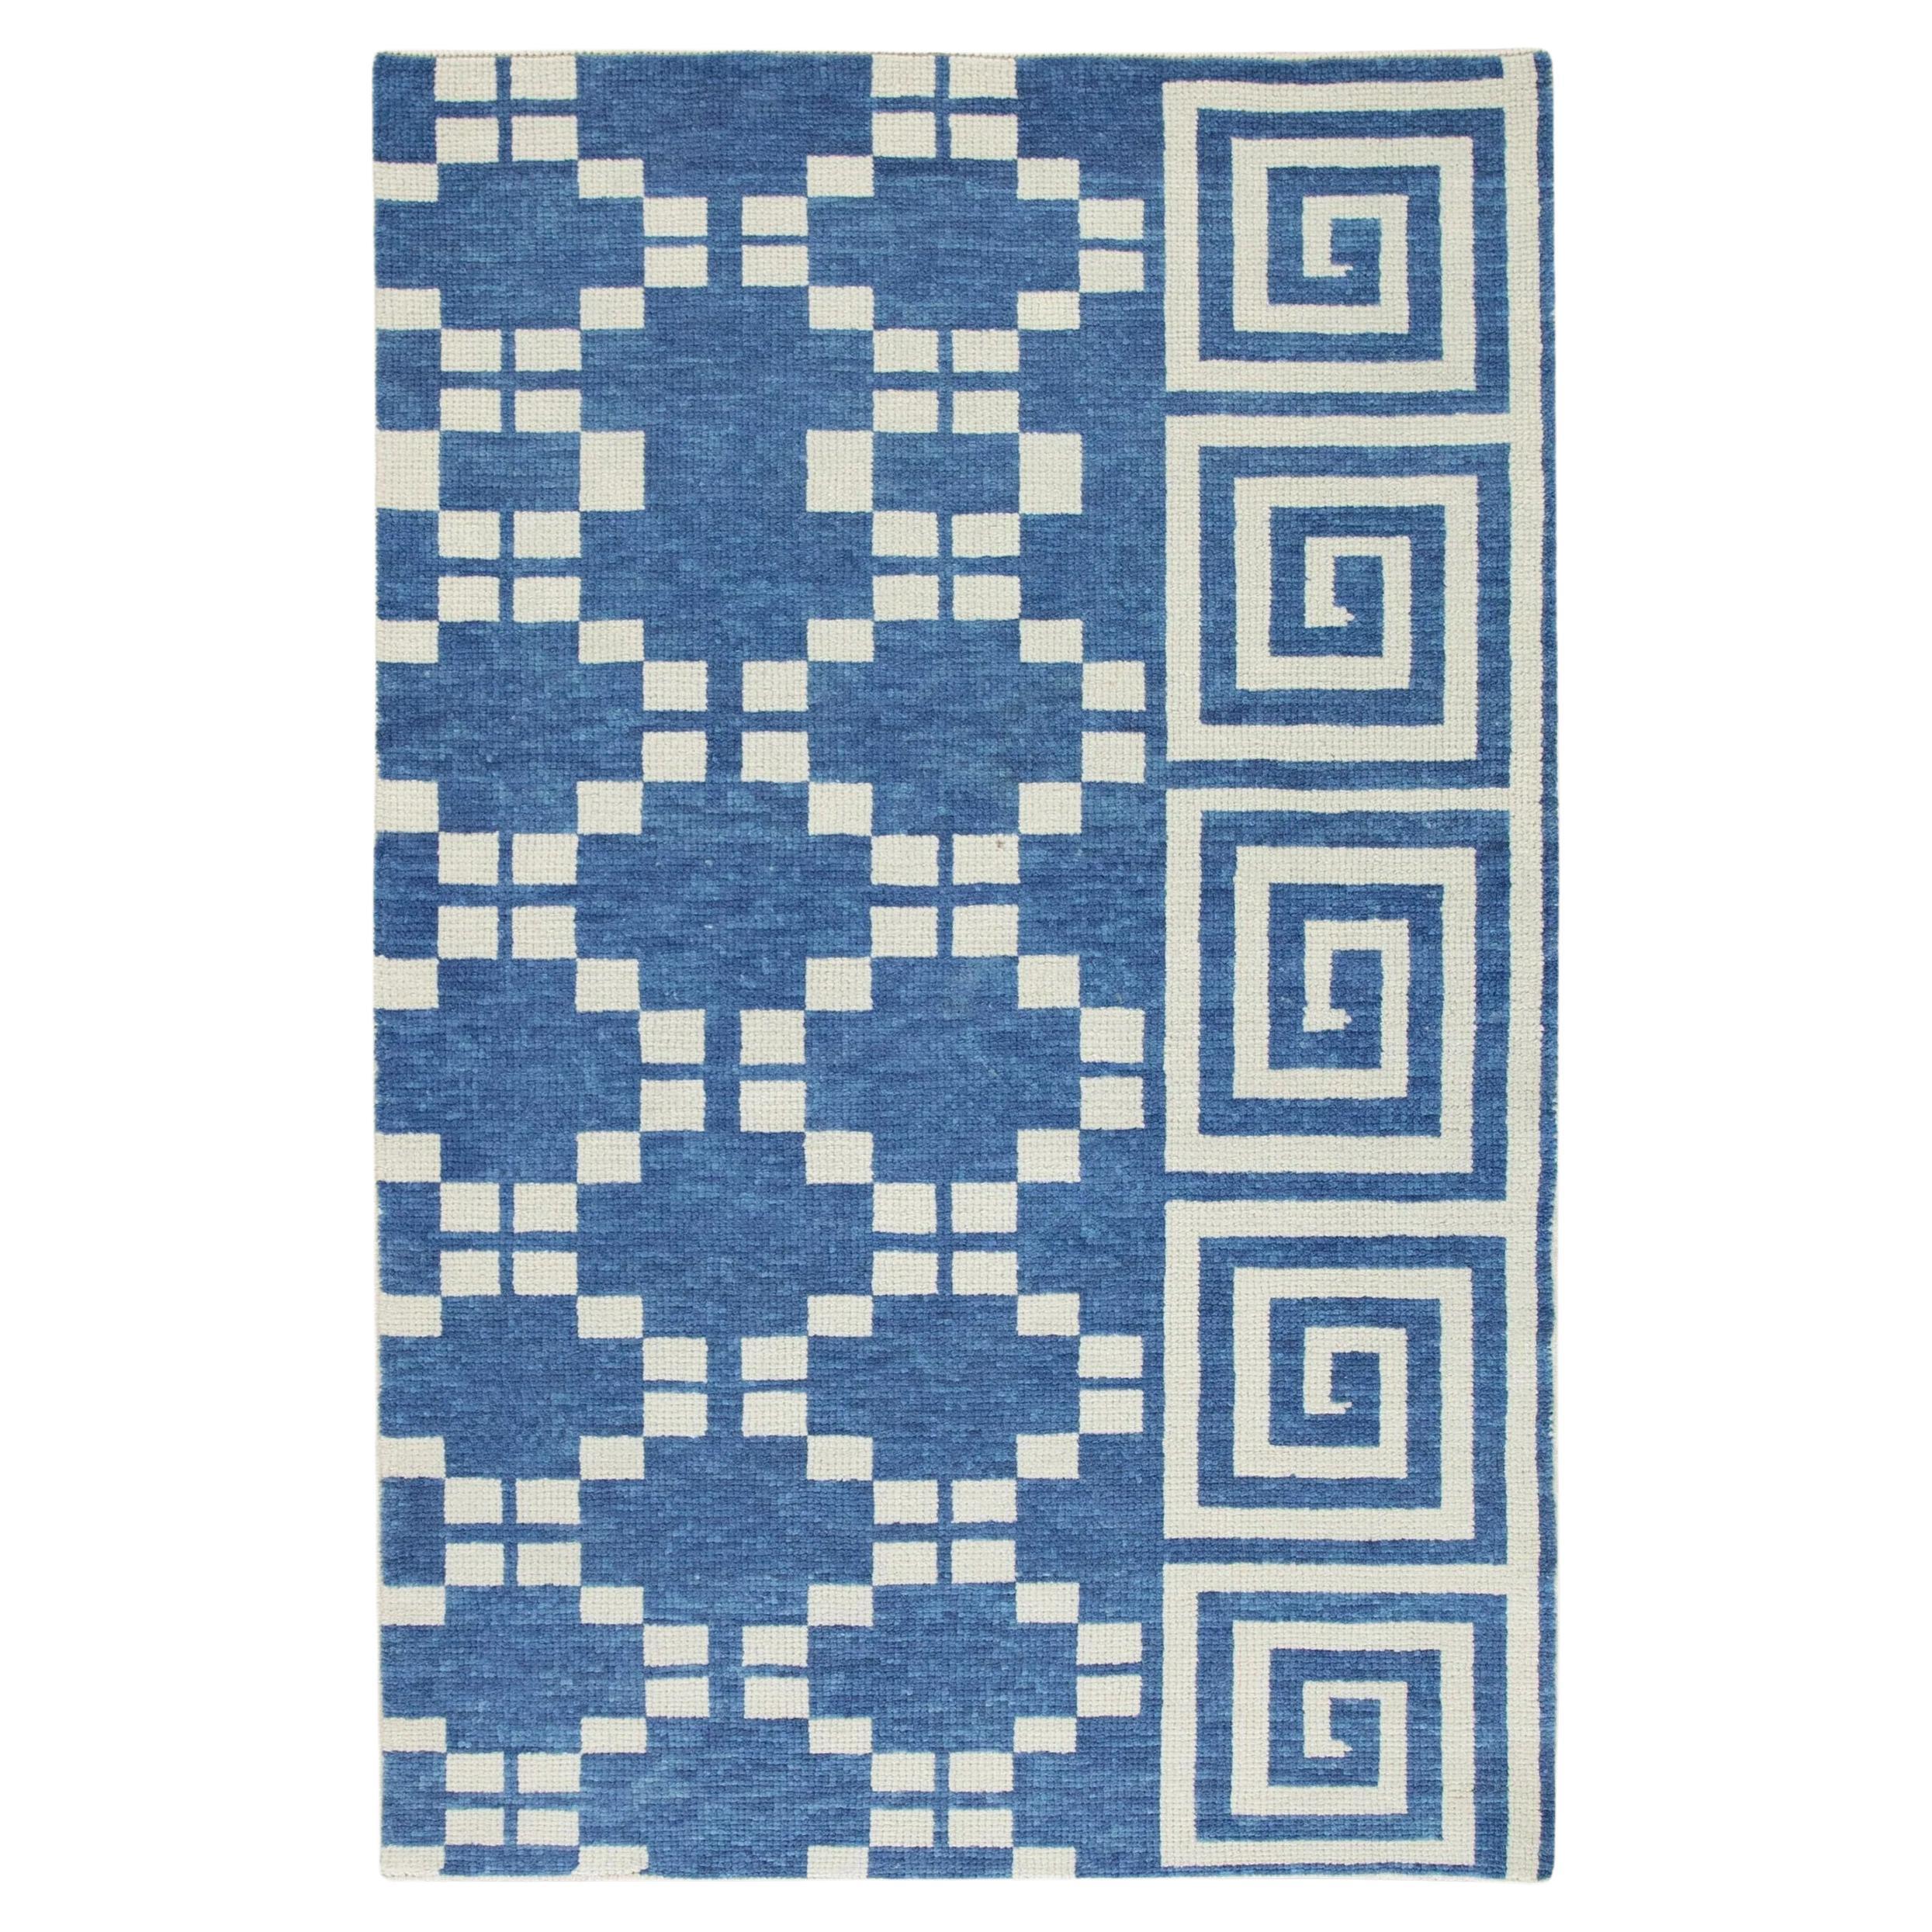 Tribal Geometric Handwoven Turkish Oushak Rug in Blue and Cream 3' x 5'2"